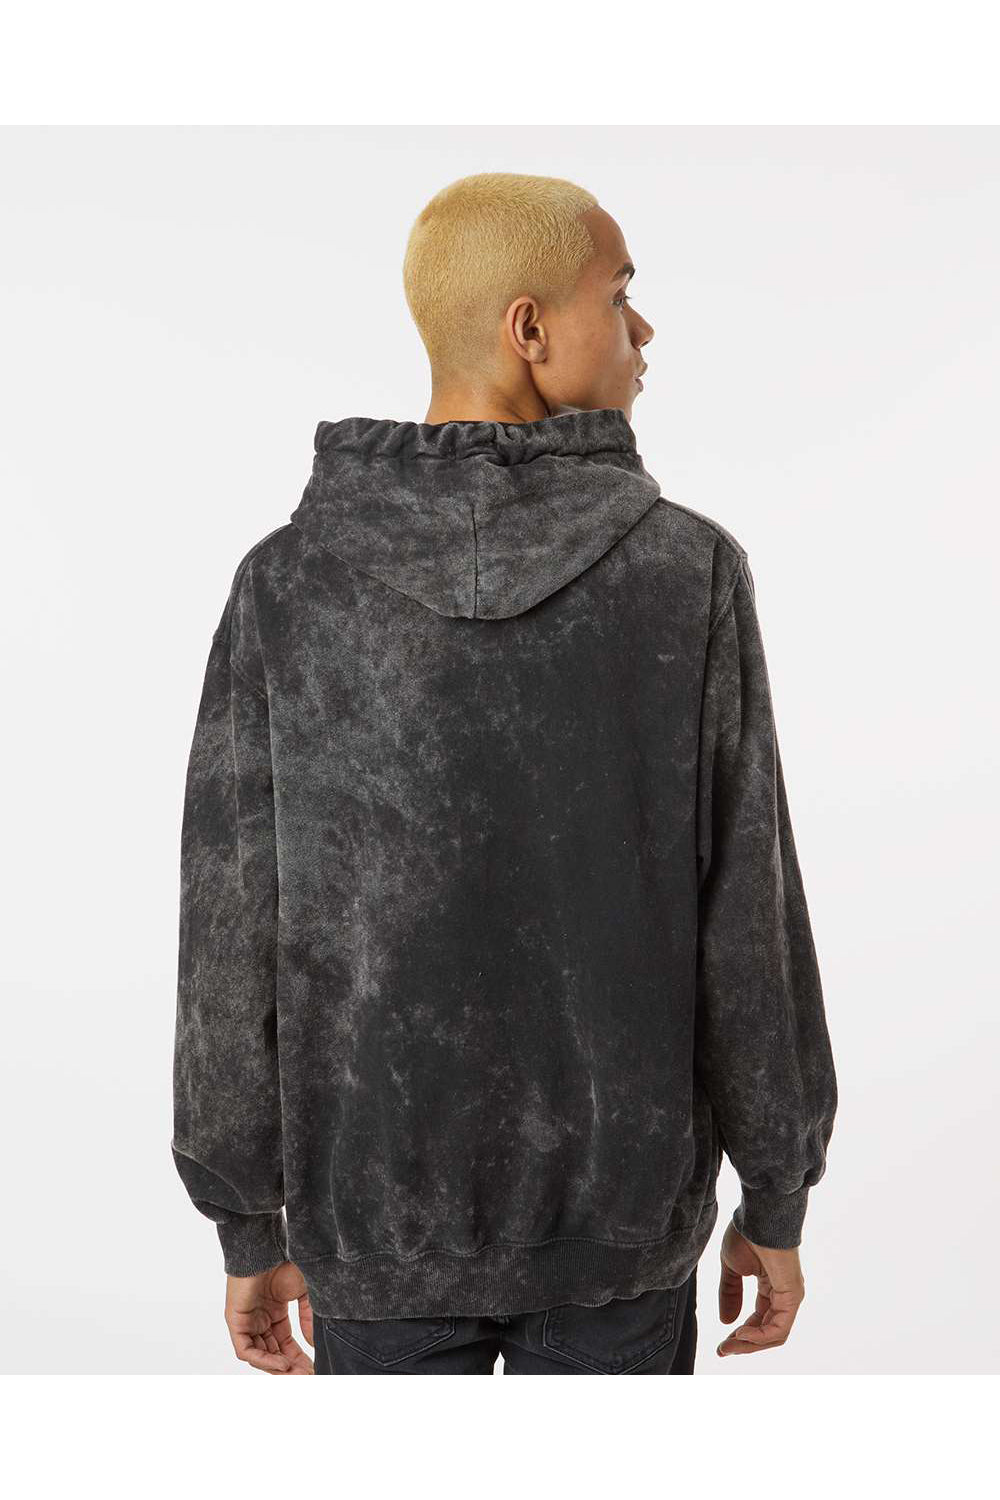 Dyenomite 854MW Mens Premium Fleece Mineral Wash Hooded Sweatshirt Hoodie Black Mineral Wash Model Back